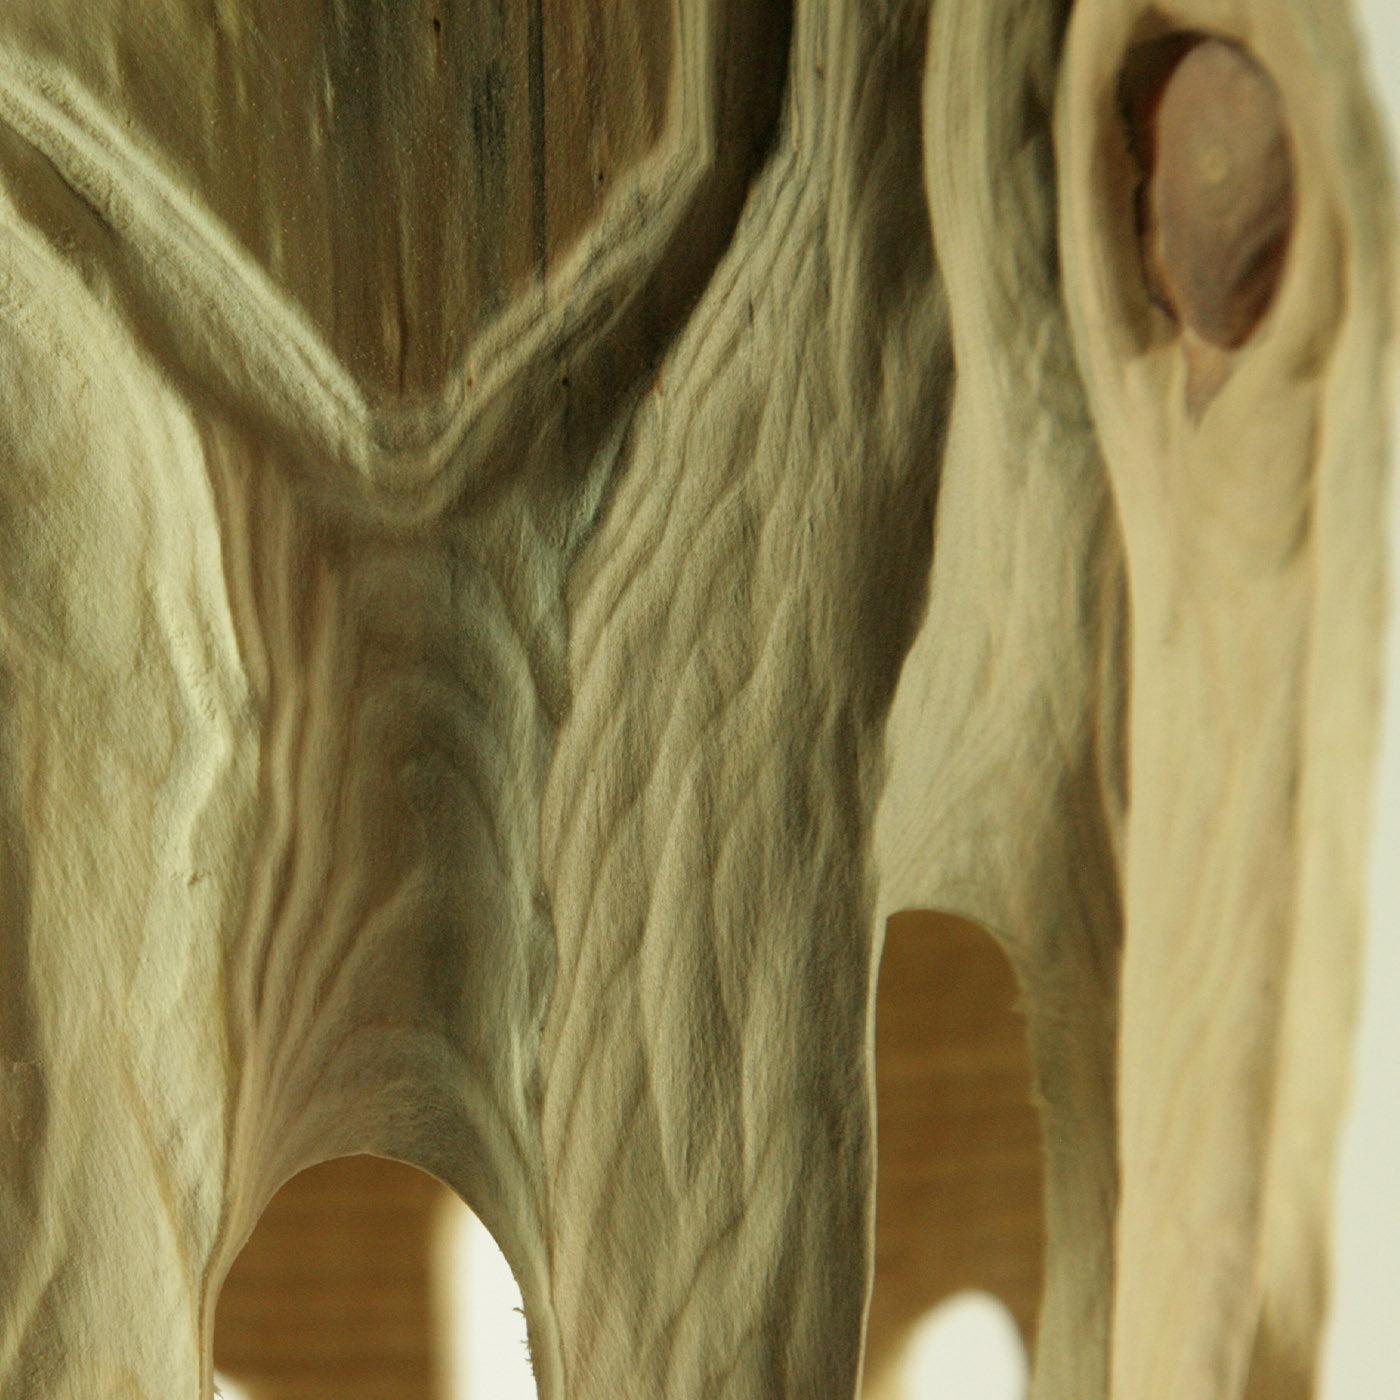 Les Montgolfières Hollow Form Araucaria Sculpture - Alternative view 2